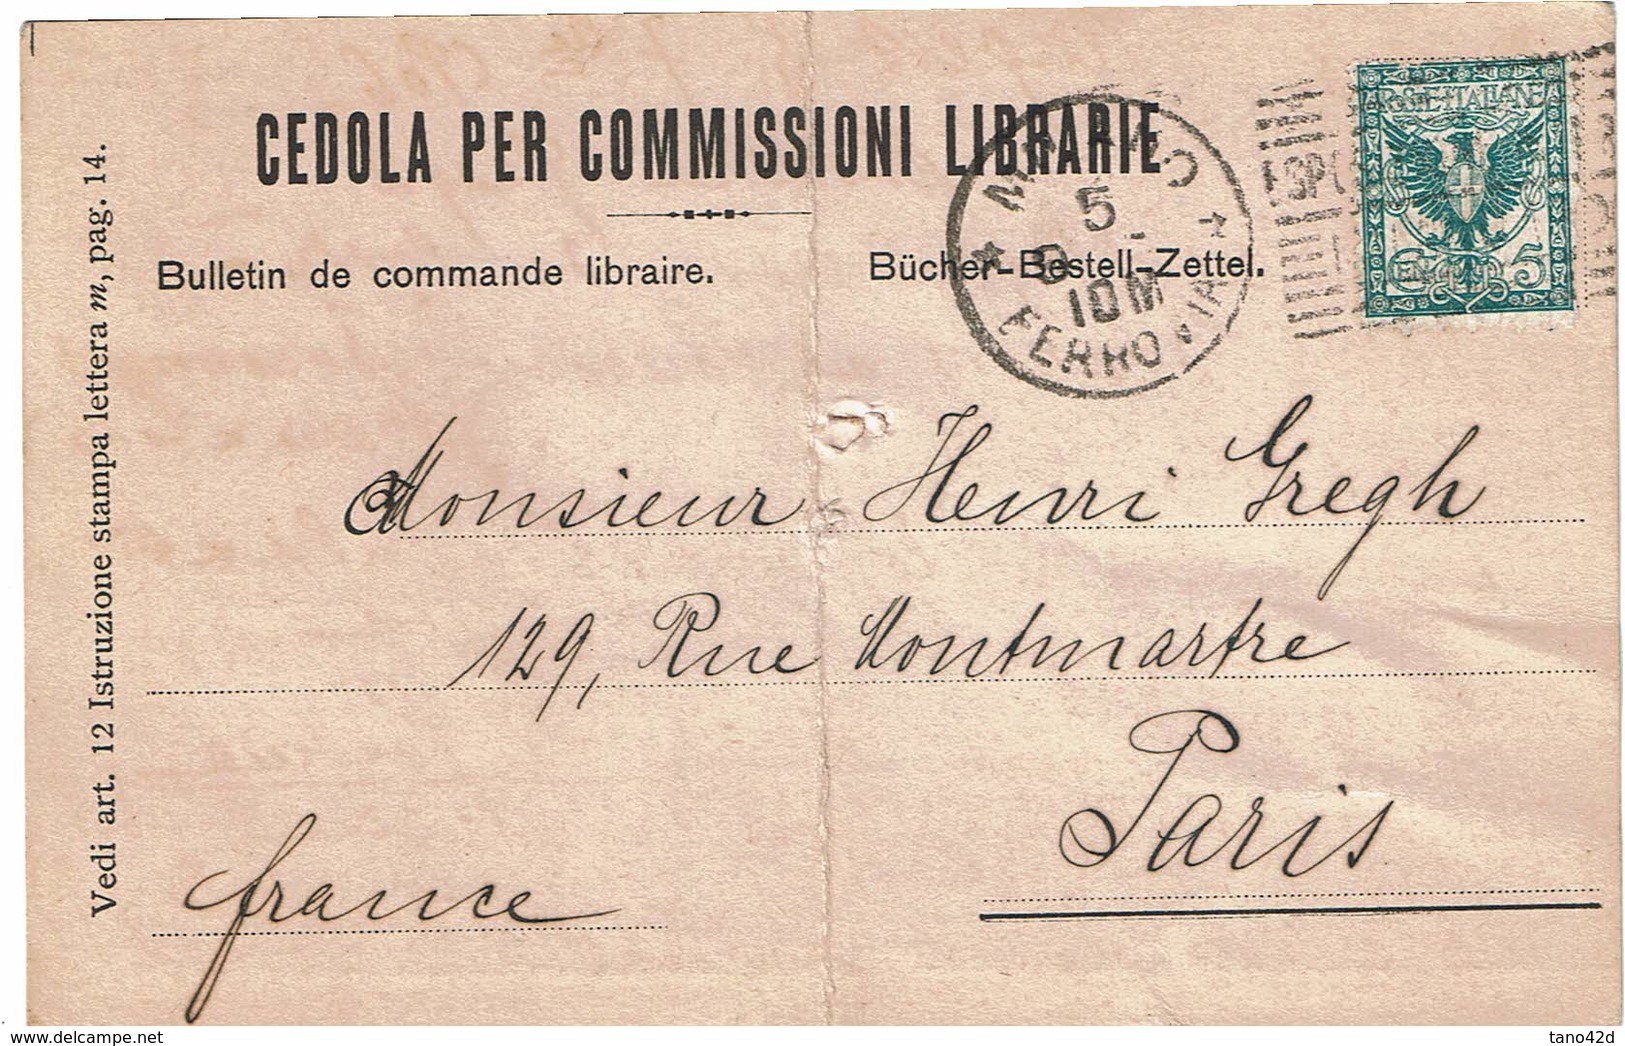 CHTD/V - ITALIE CEDOLA PER COMMISSIONI LIBRARIE SEPTEMBRE 1909 - Poststempel